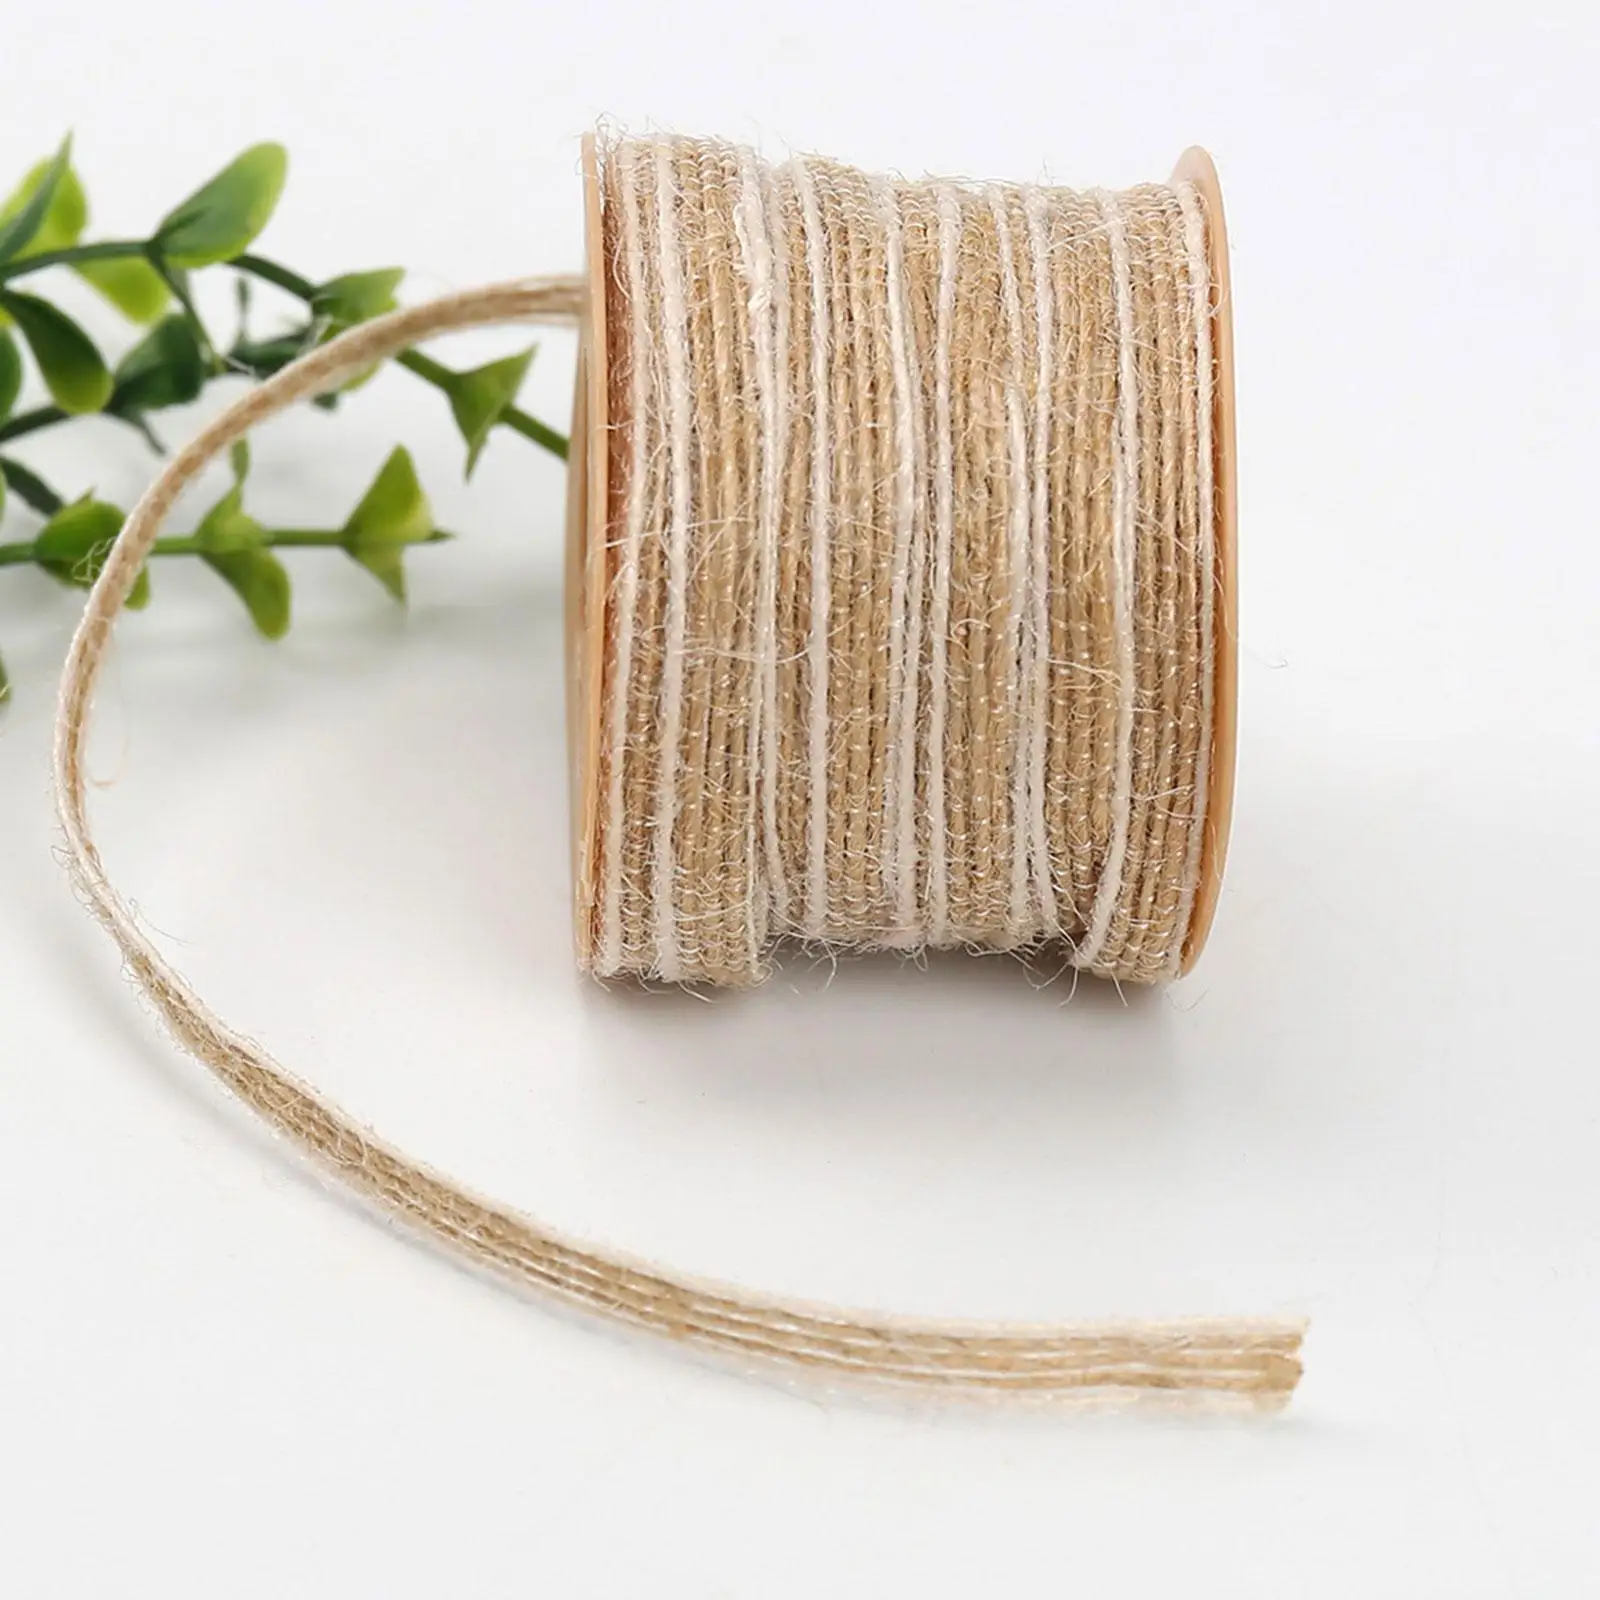 10 Meters Jute Rope Decorative Wrap Handmade Parcel Supplies Crafts Artwork Hemp 5mm Twine Rope for Macrame Wedding Garden